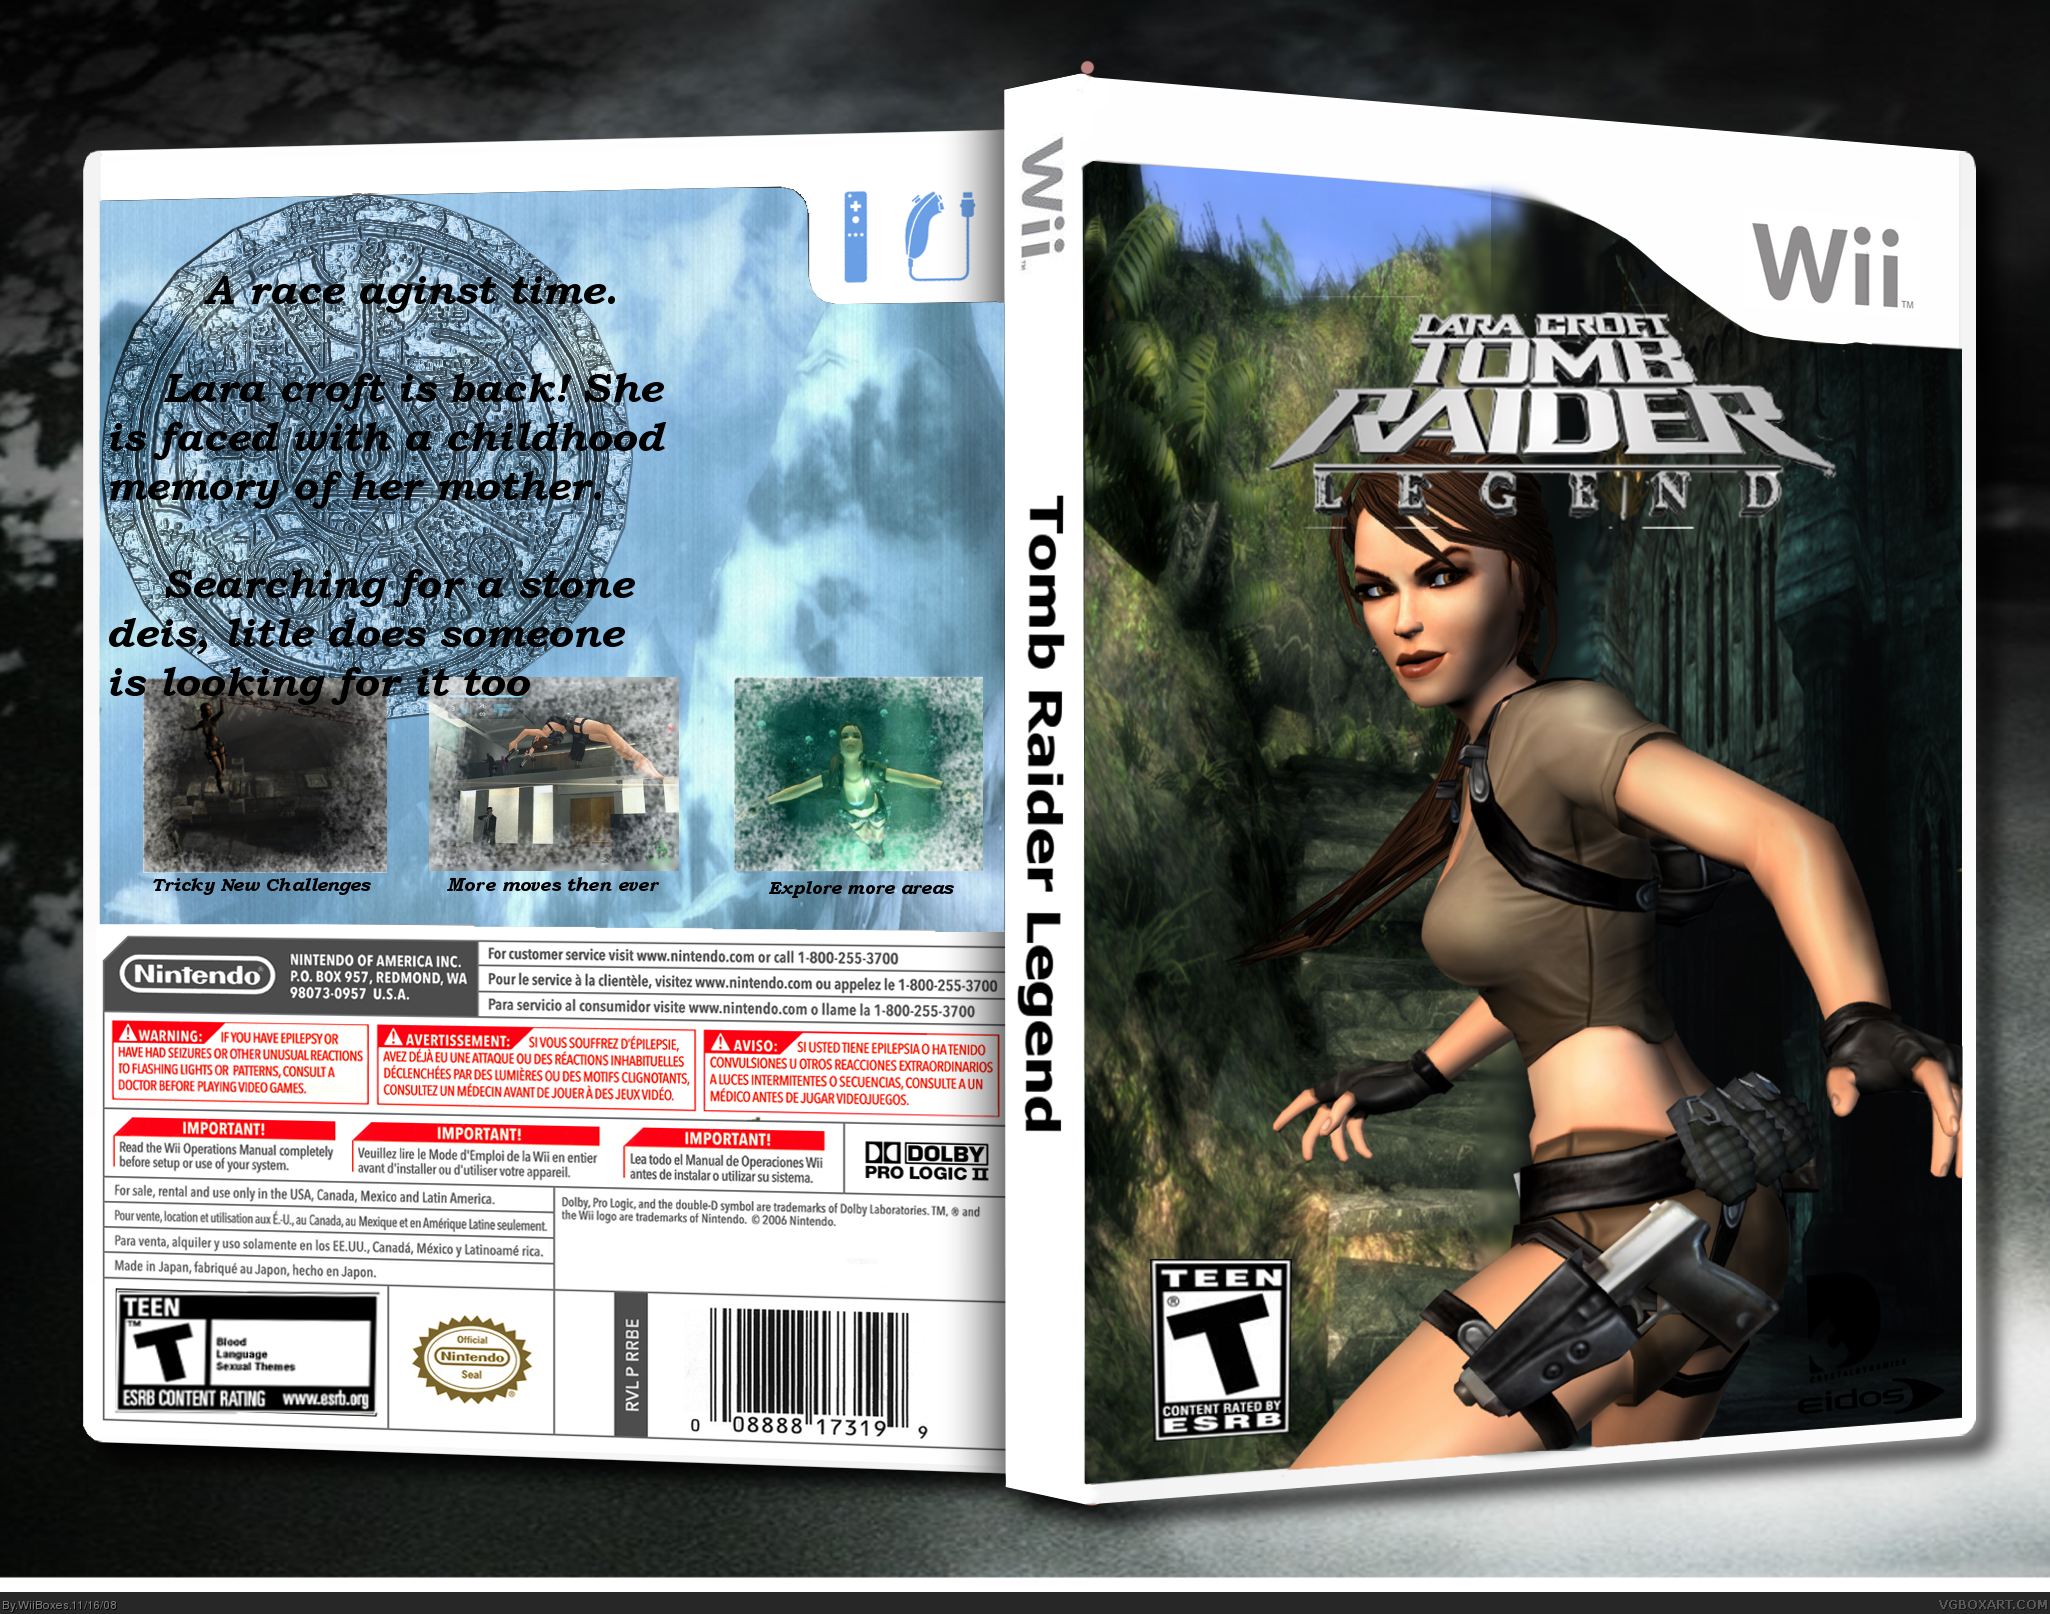 Tomb Raider: Legend box cover